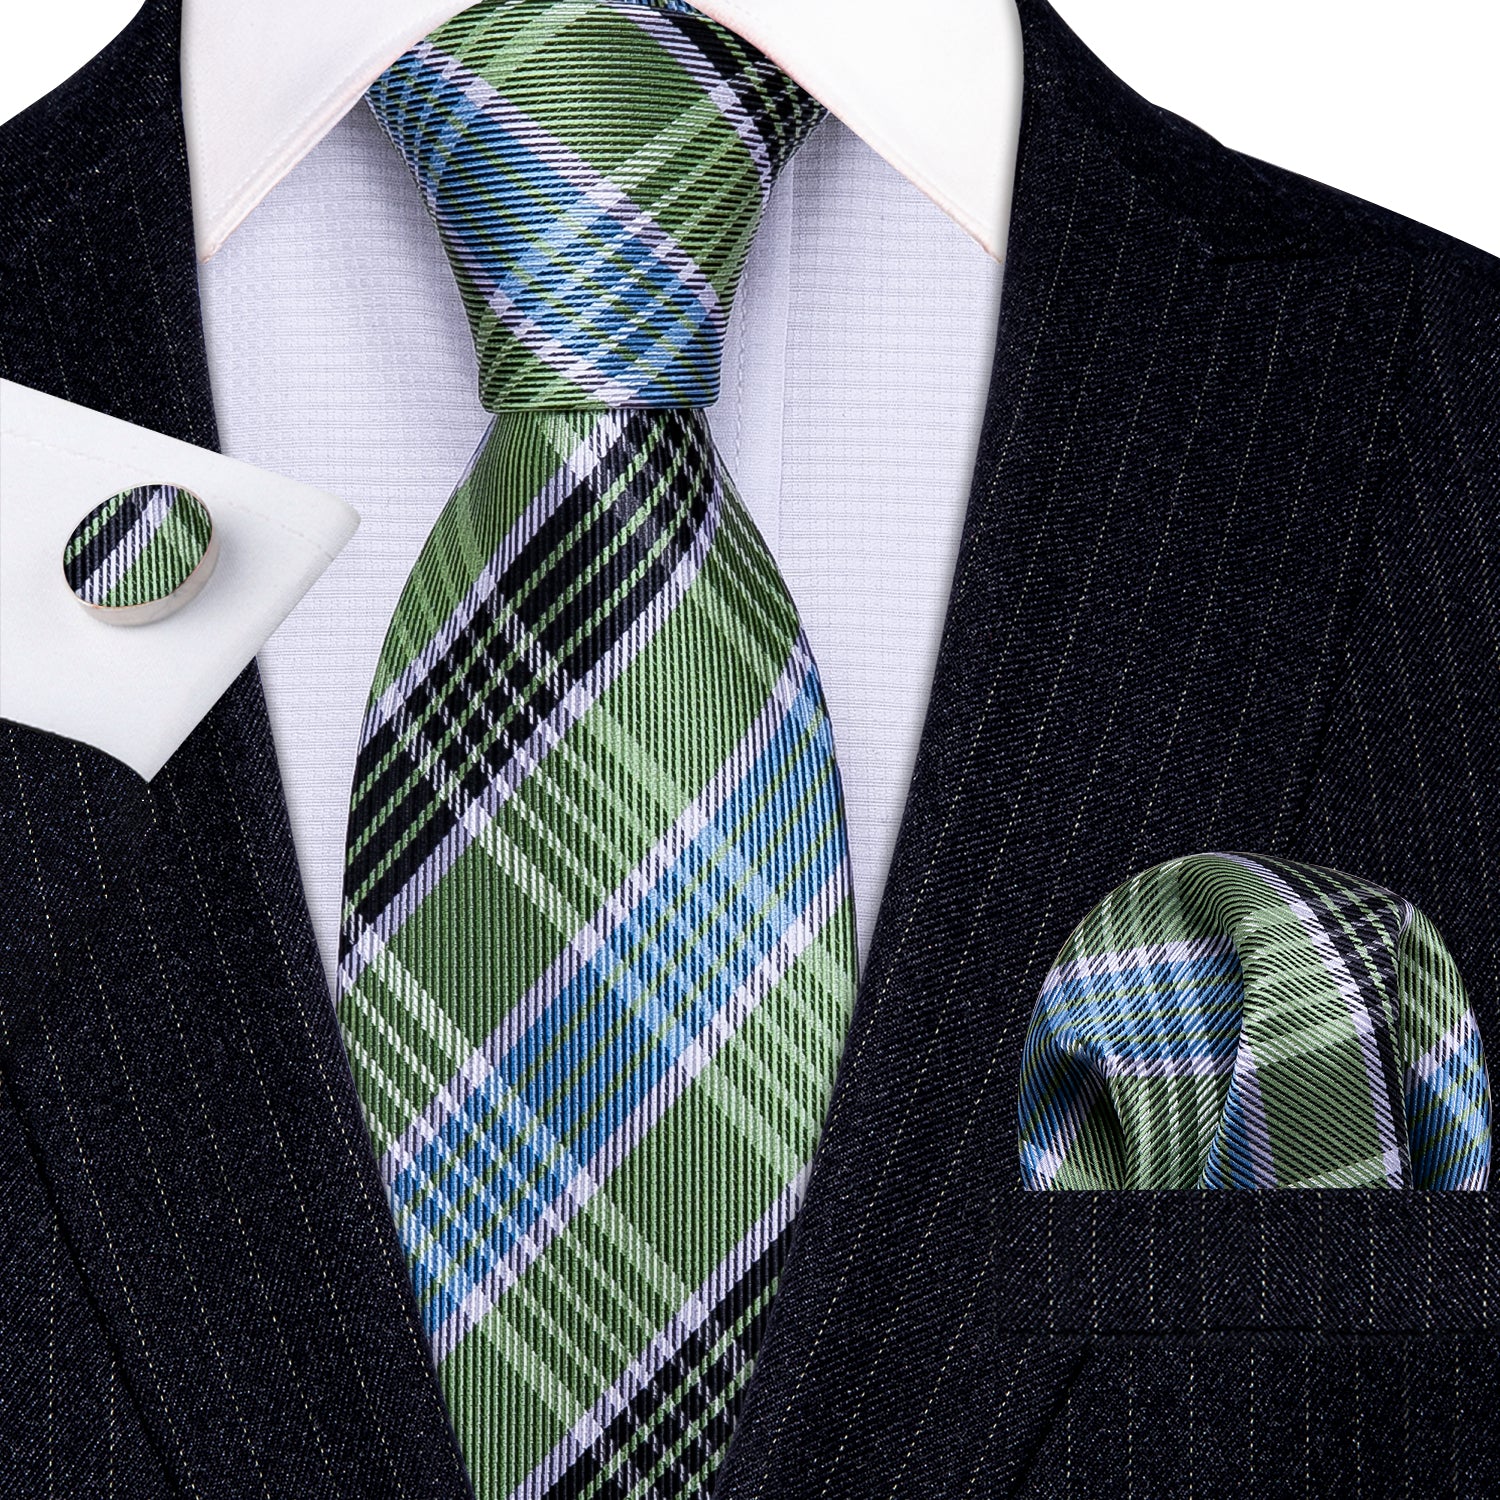 New Novelty Green Blue Striped Silk Tie Hanky Cufflinks Set